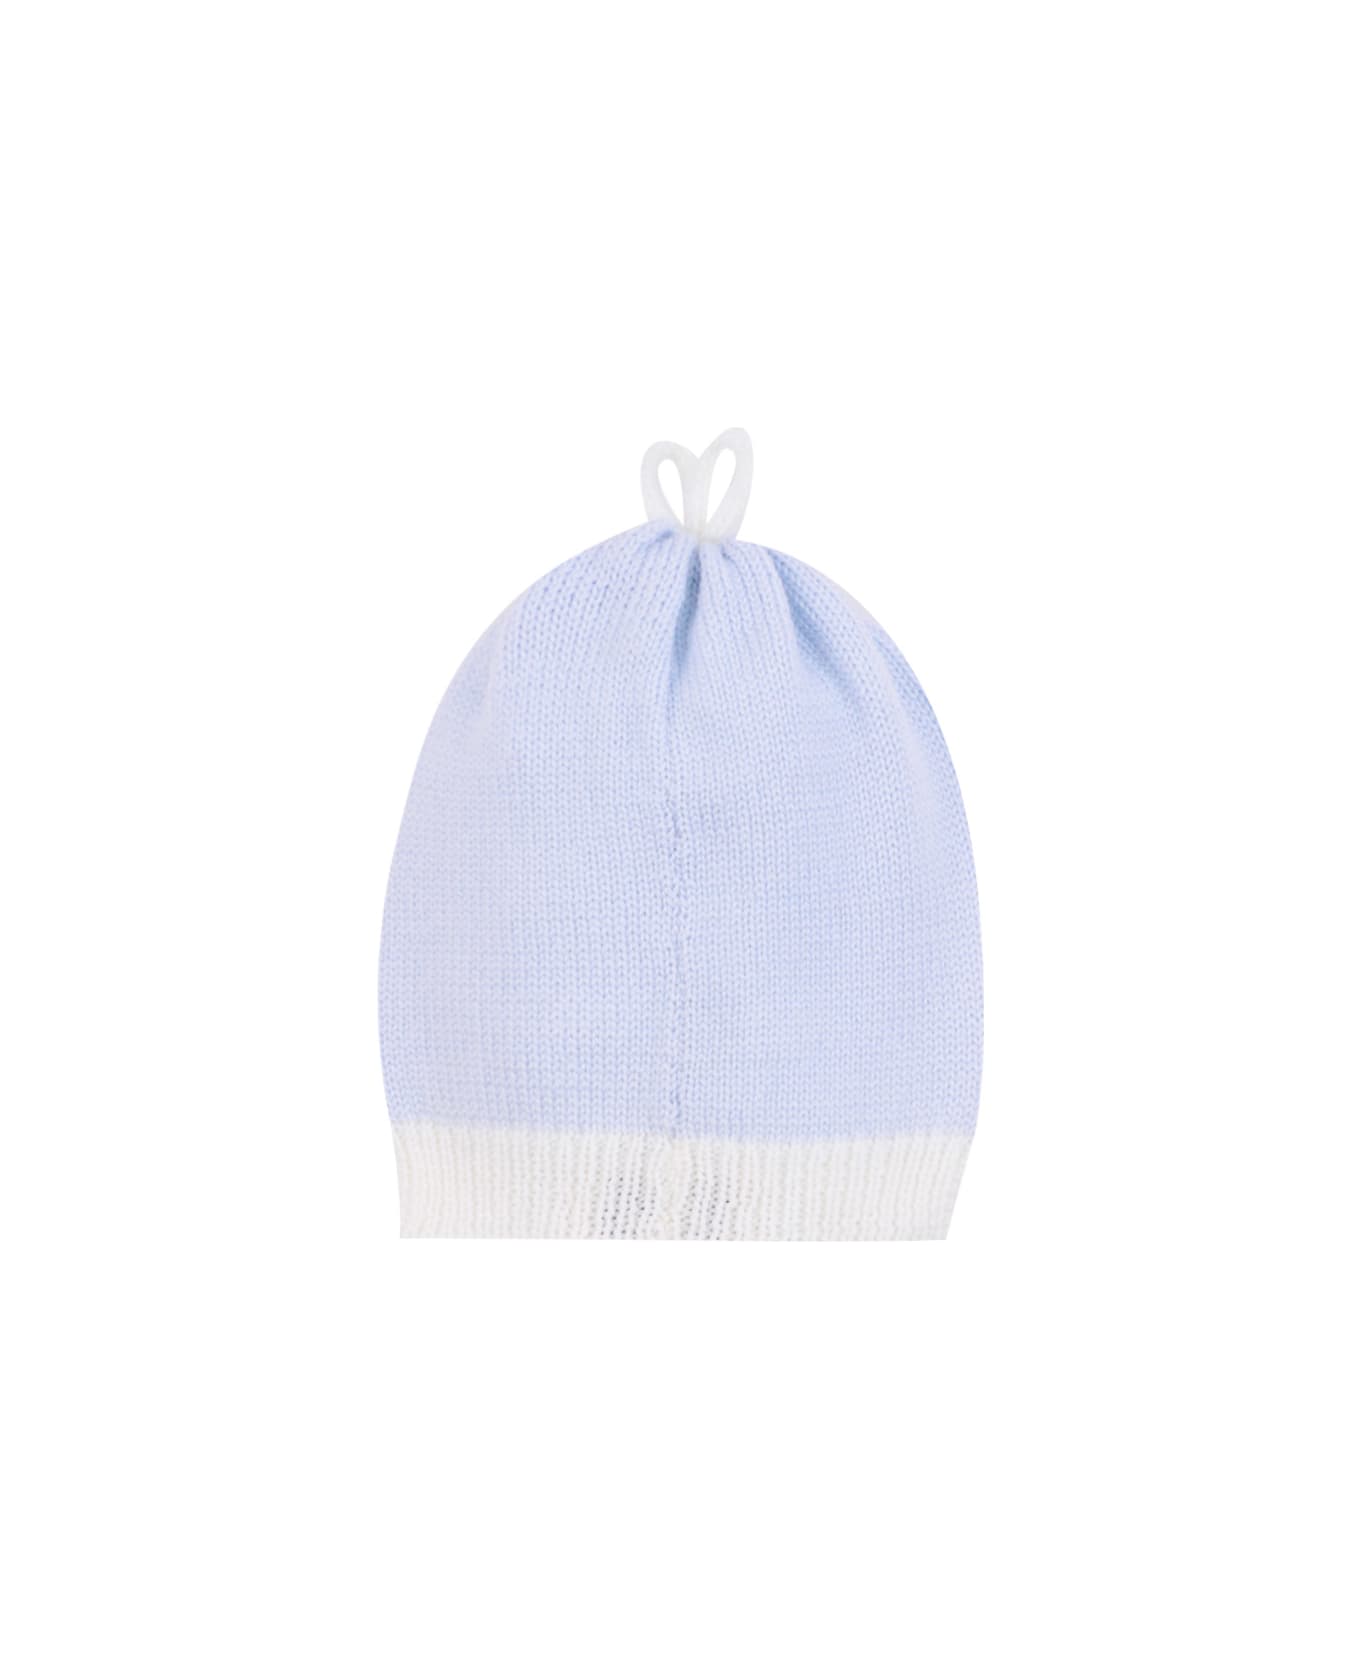 Piccola Giuggiola Wool Hat - Light blue